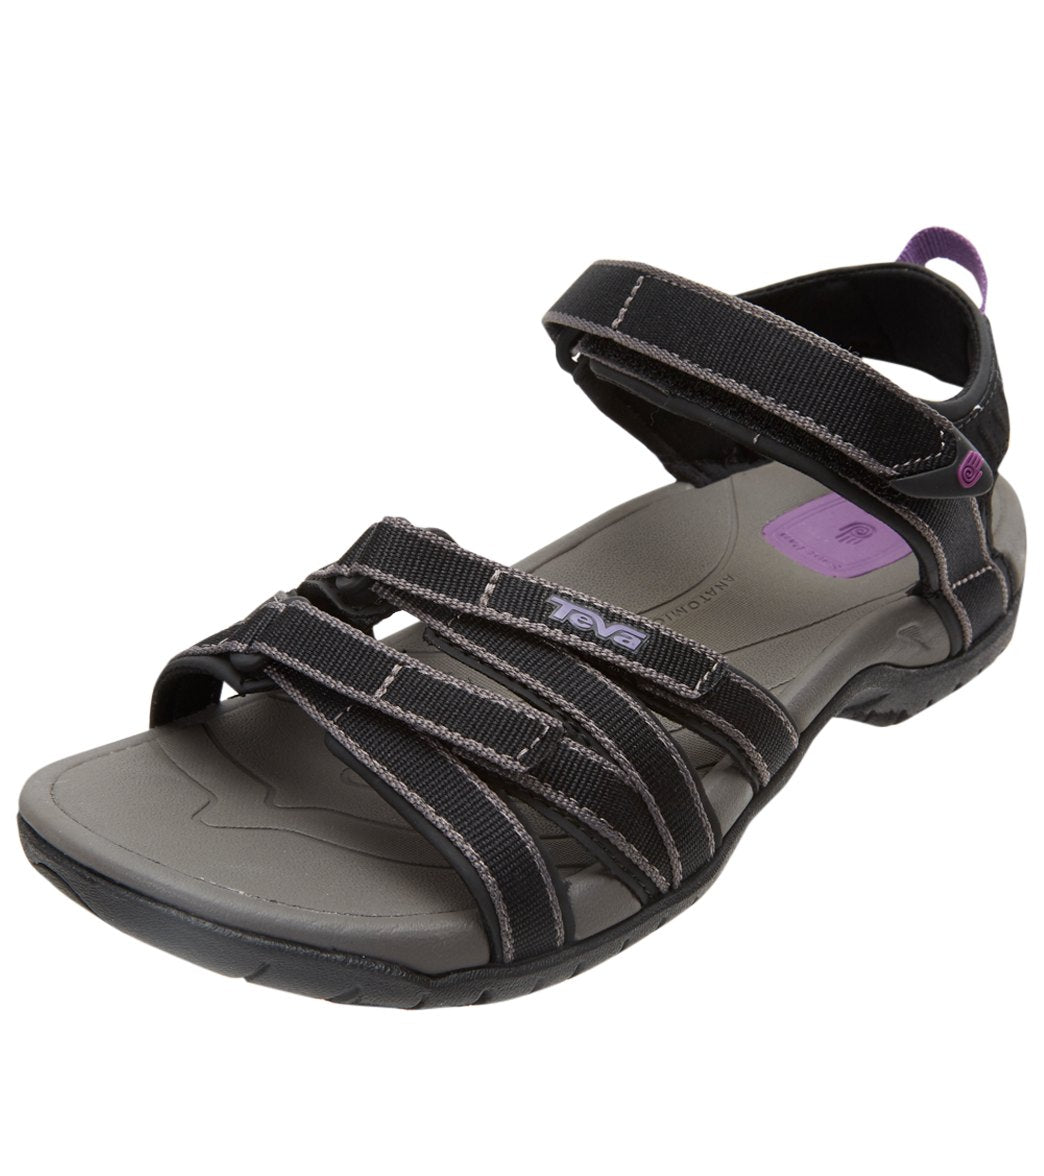 Teva Women's Tirra Shoes - Black/Grey 5.5 Eva/Foam/Rubber - Swimoutlet.com